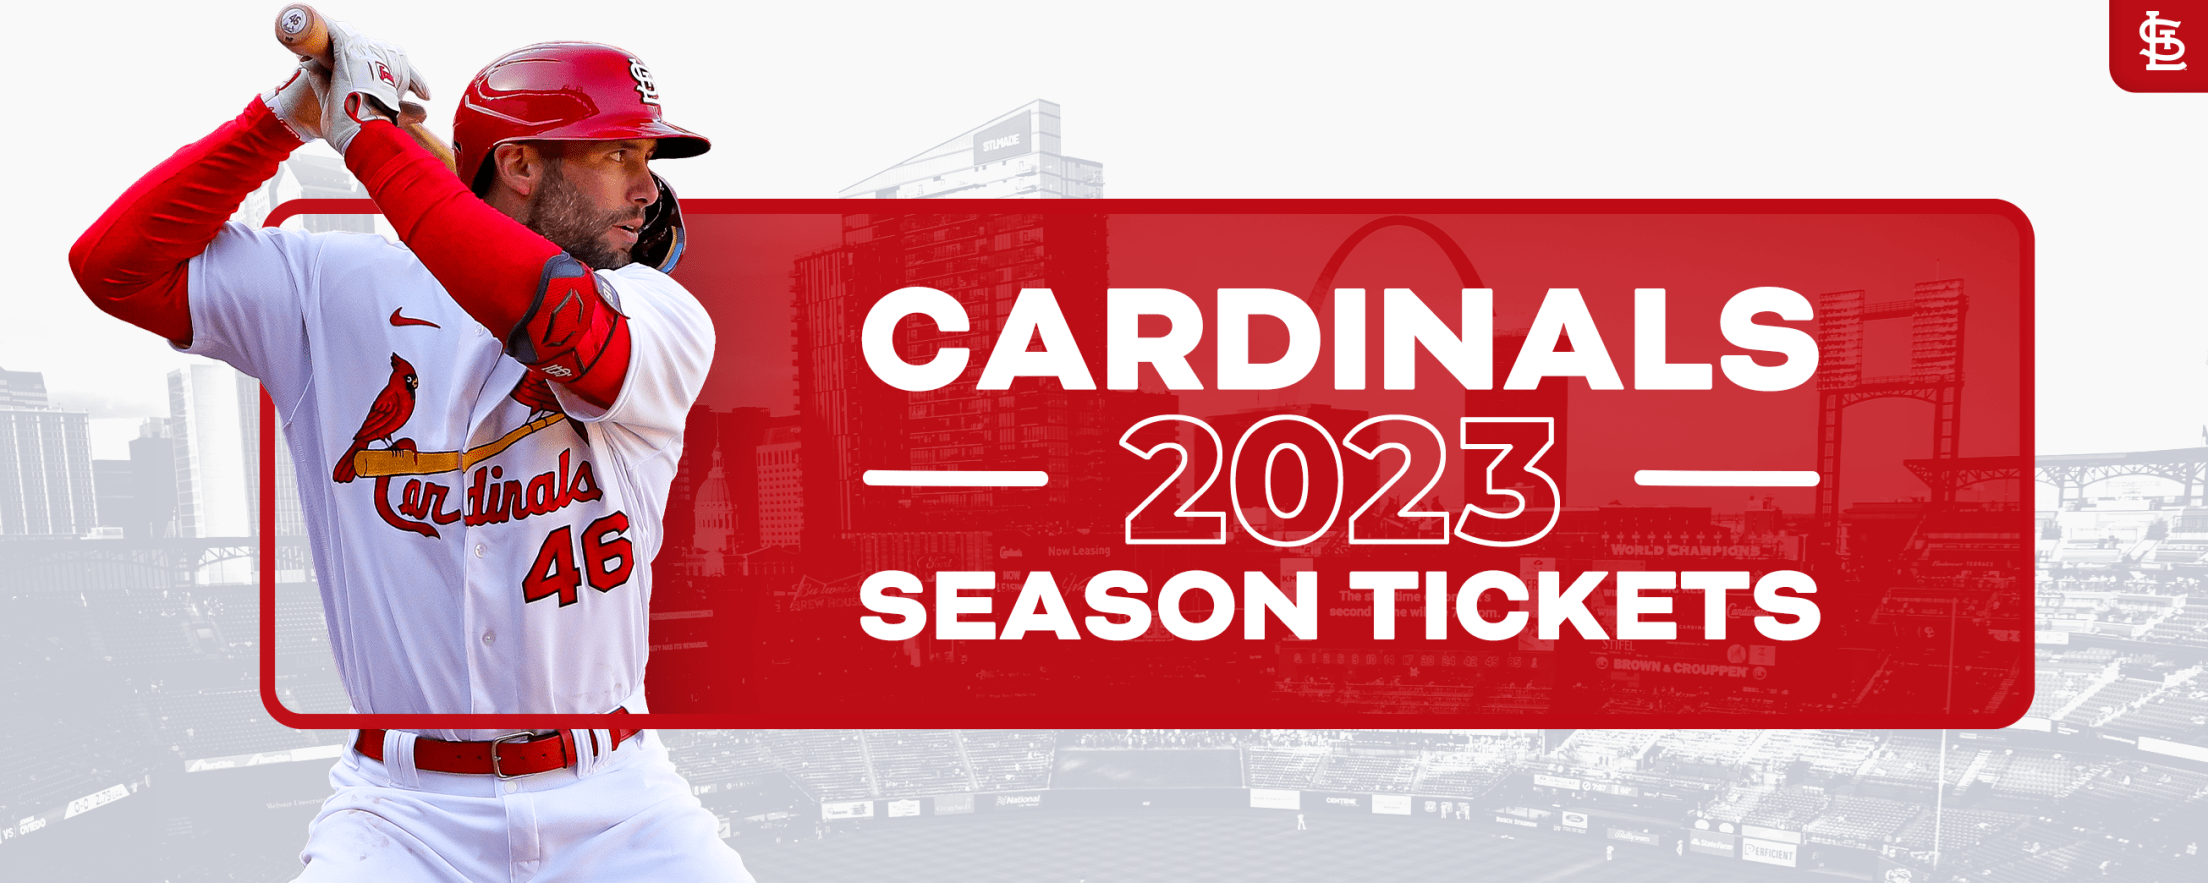 Season Tickets St. Louis Cardinals